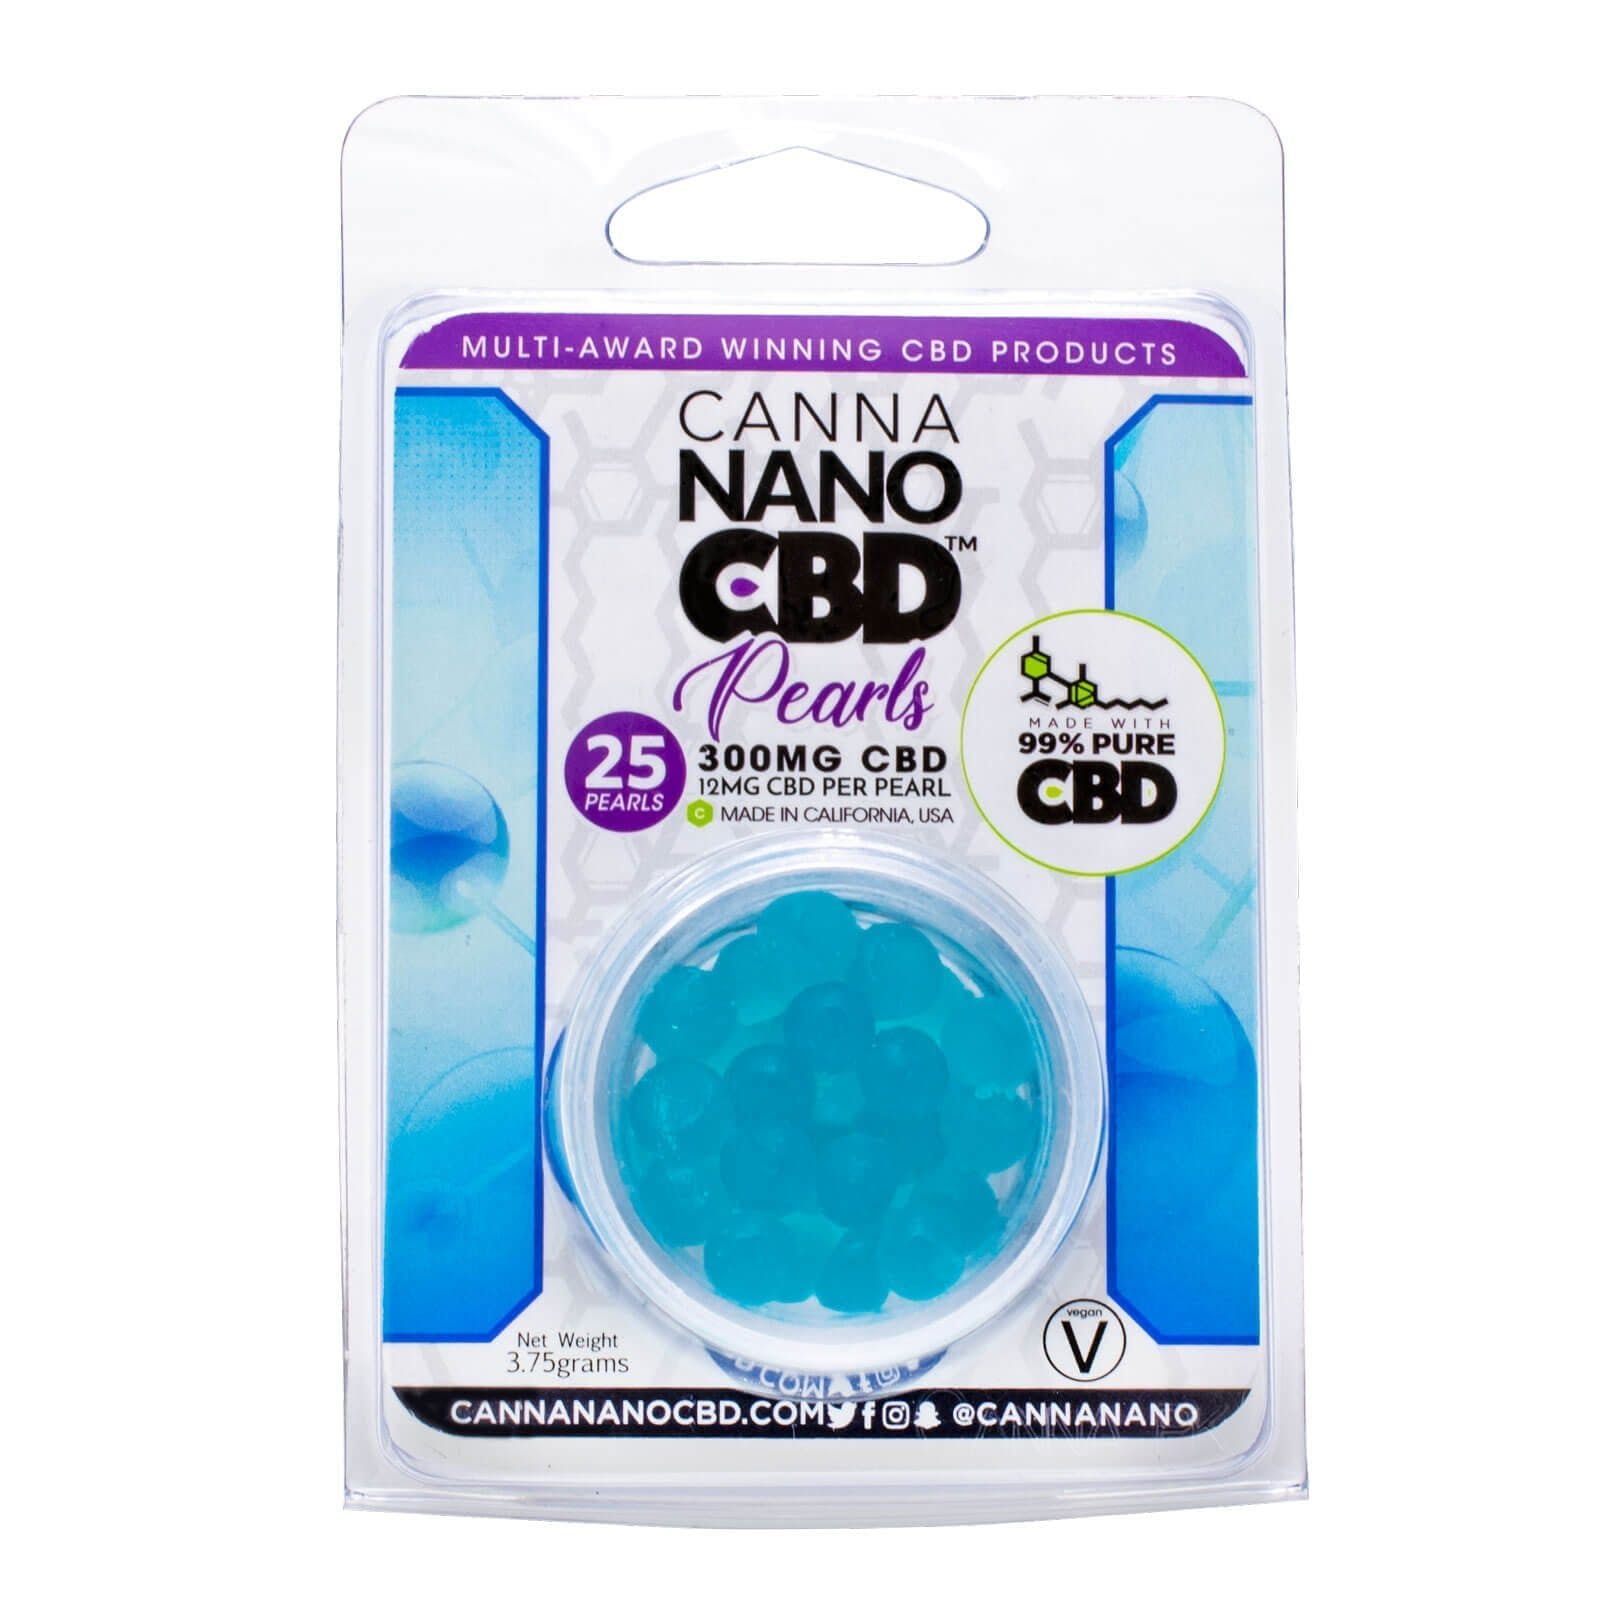 Canna Nano CBD Pearls